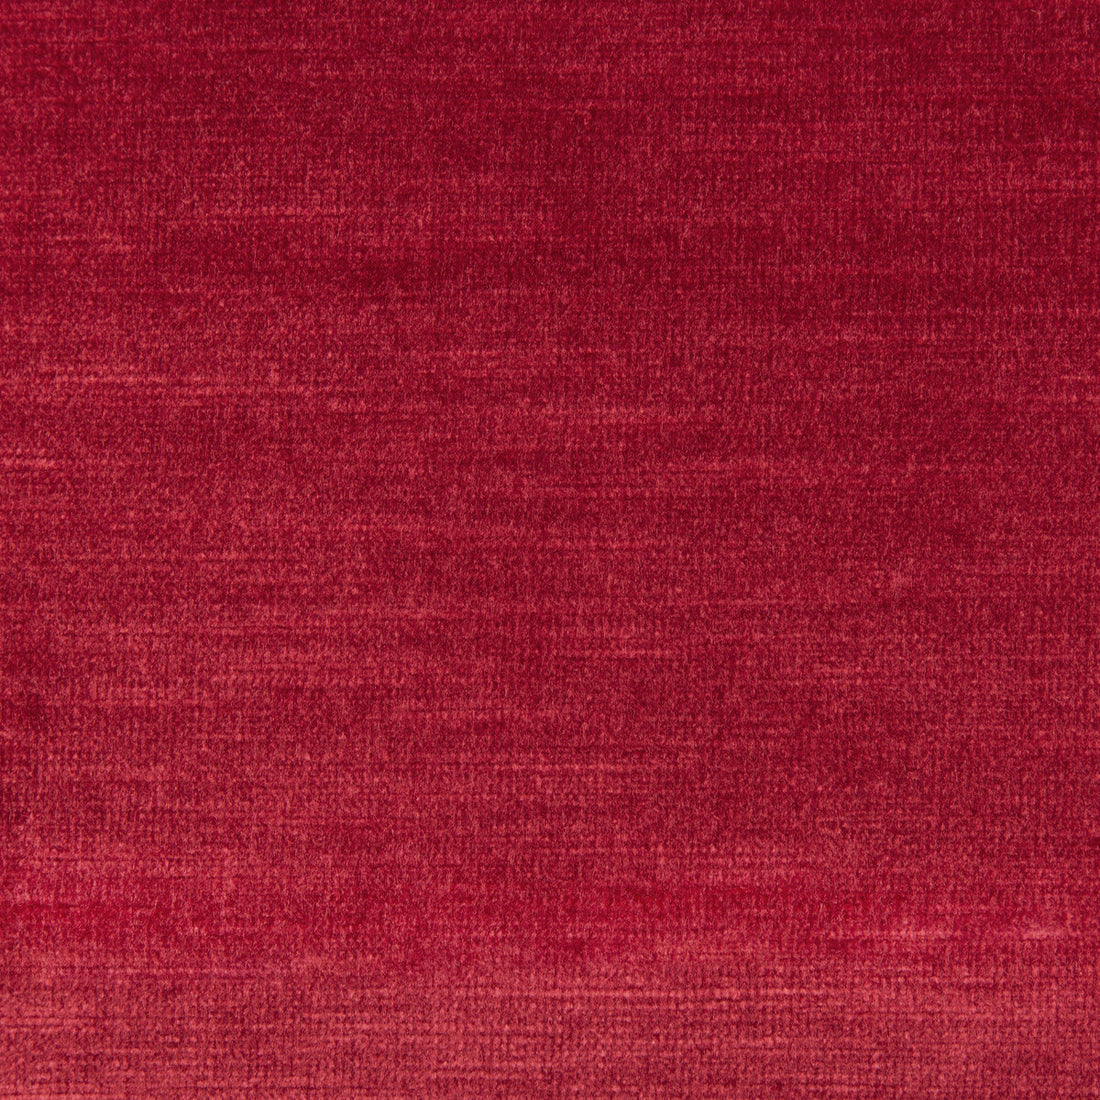 Venetian fabric in lipstick color - pattern 31326.919.0 - by Kravet Design